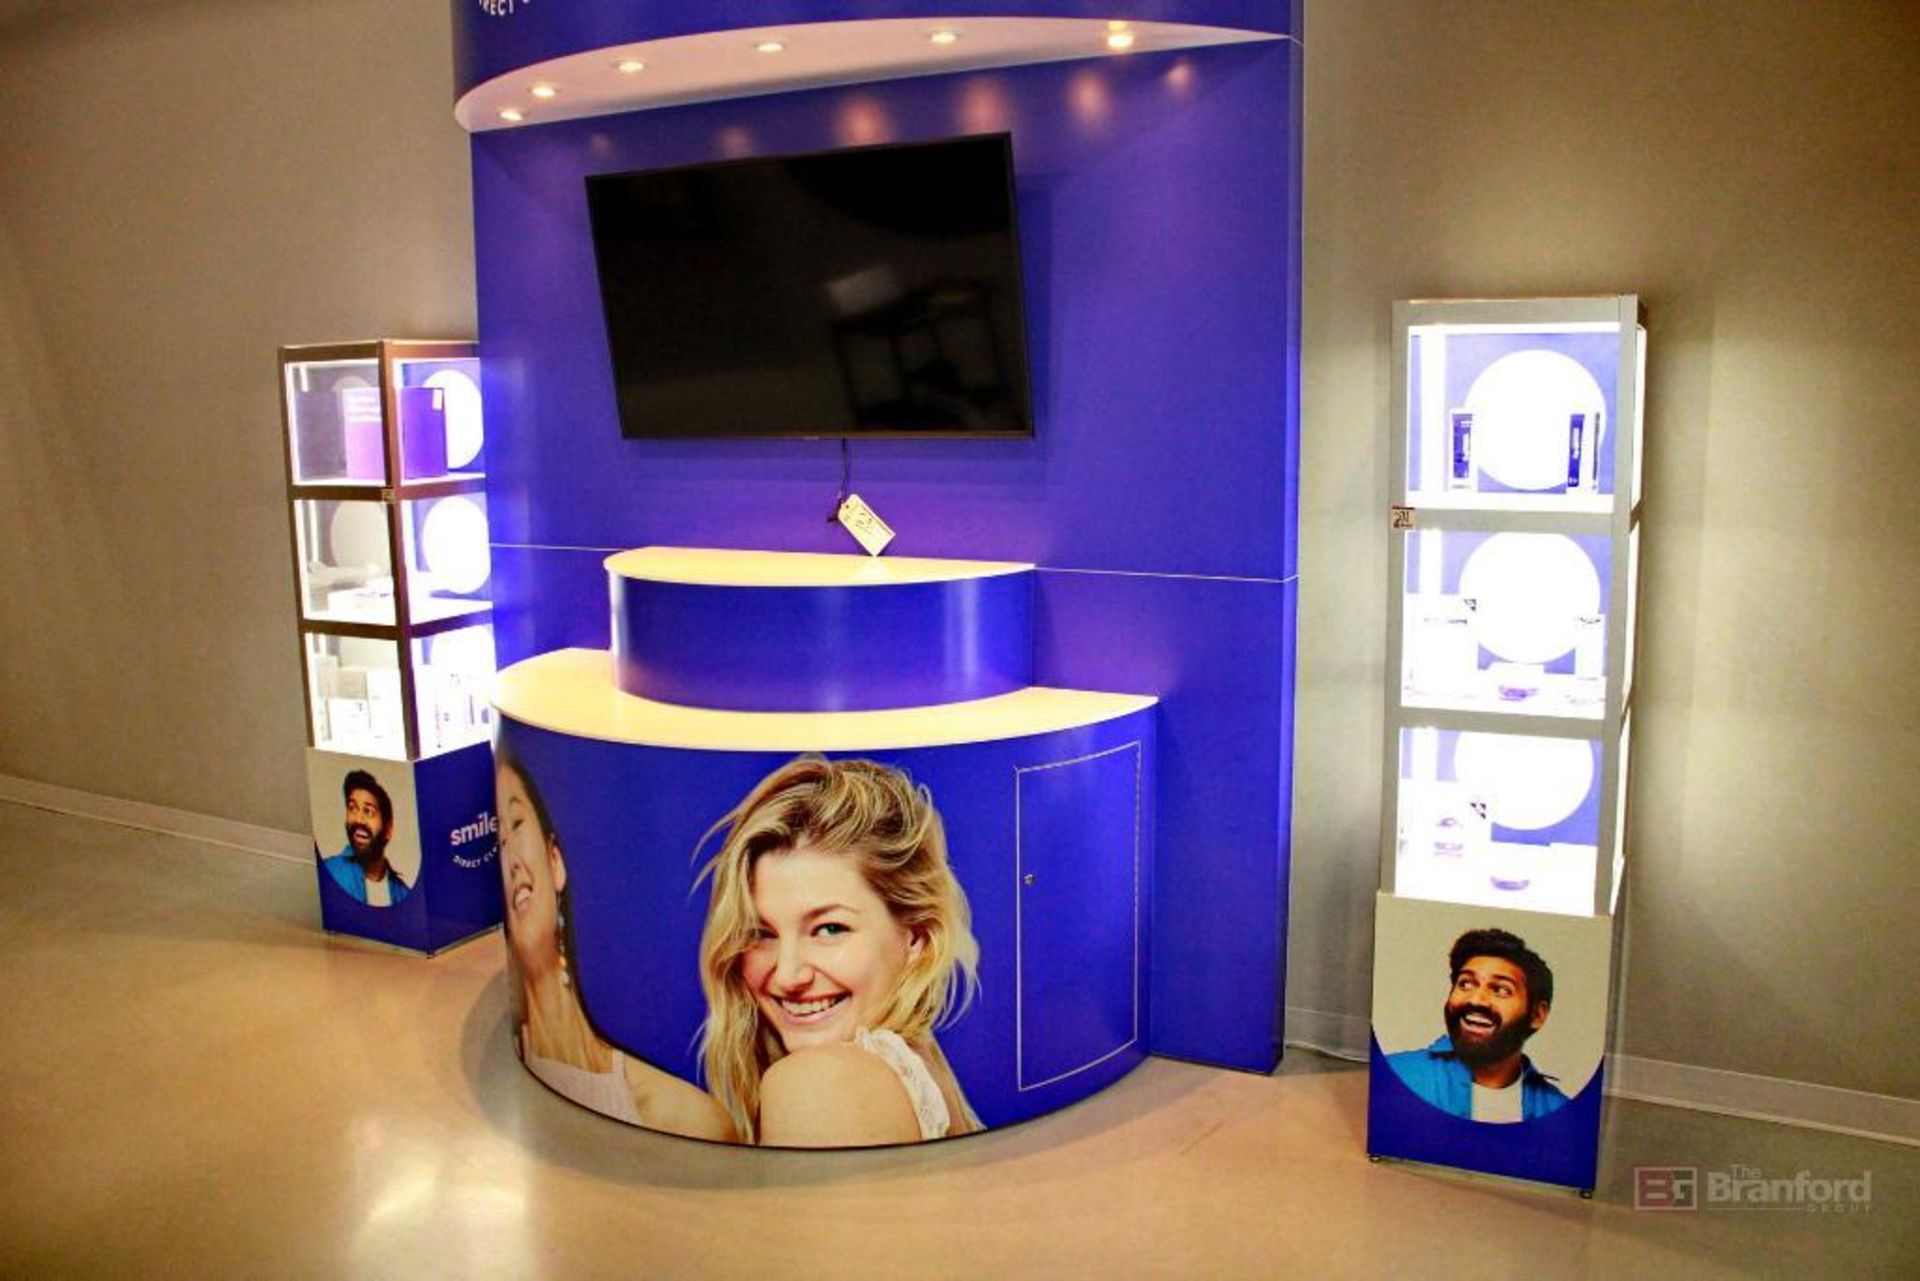 Smile Direct Displays & Samsung TV - Image 2 of 3